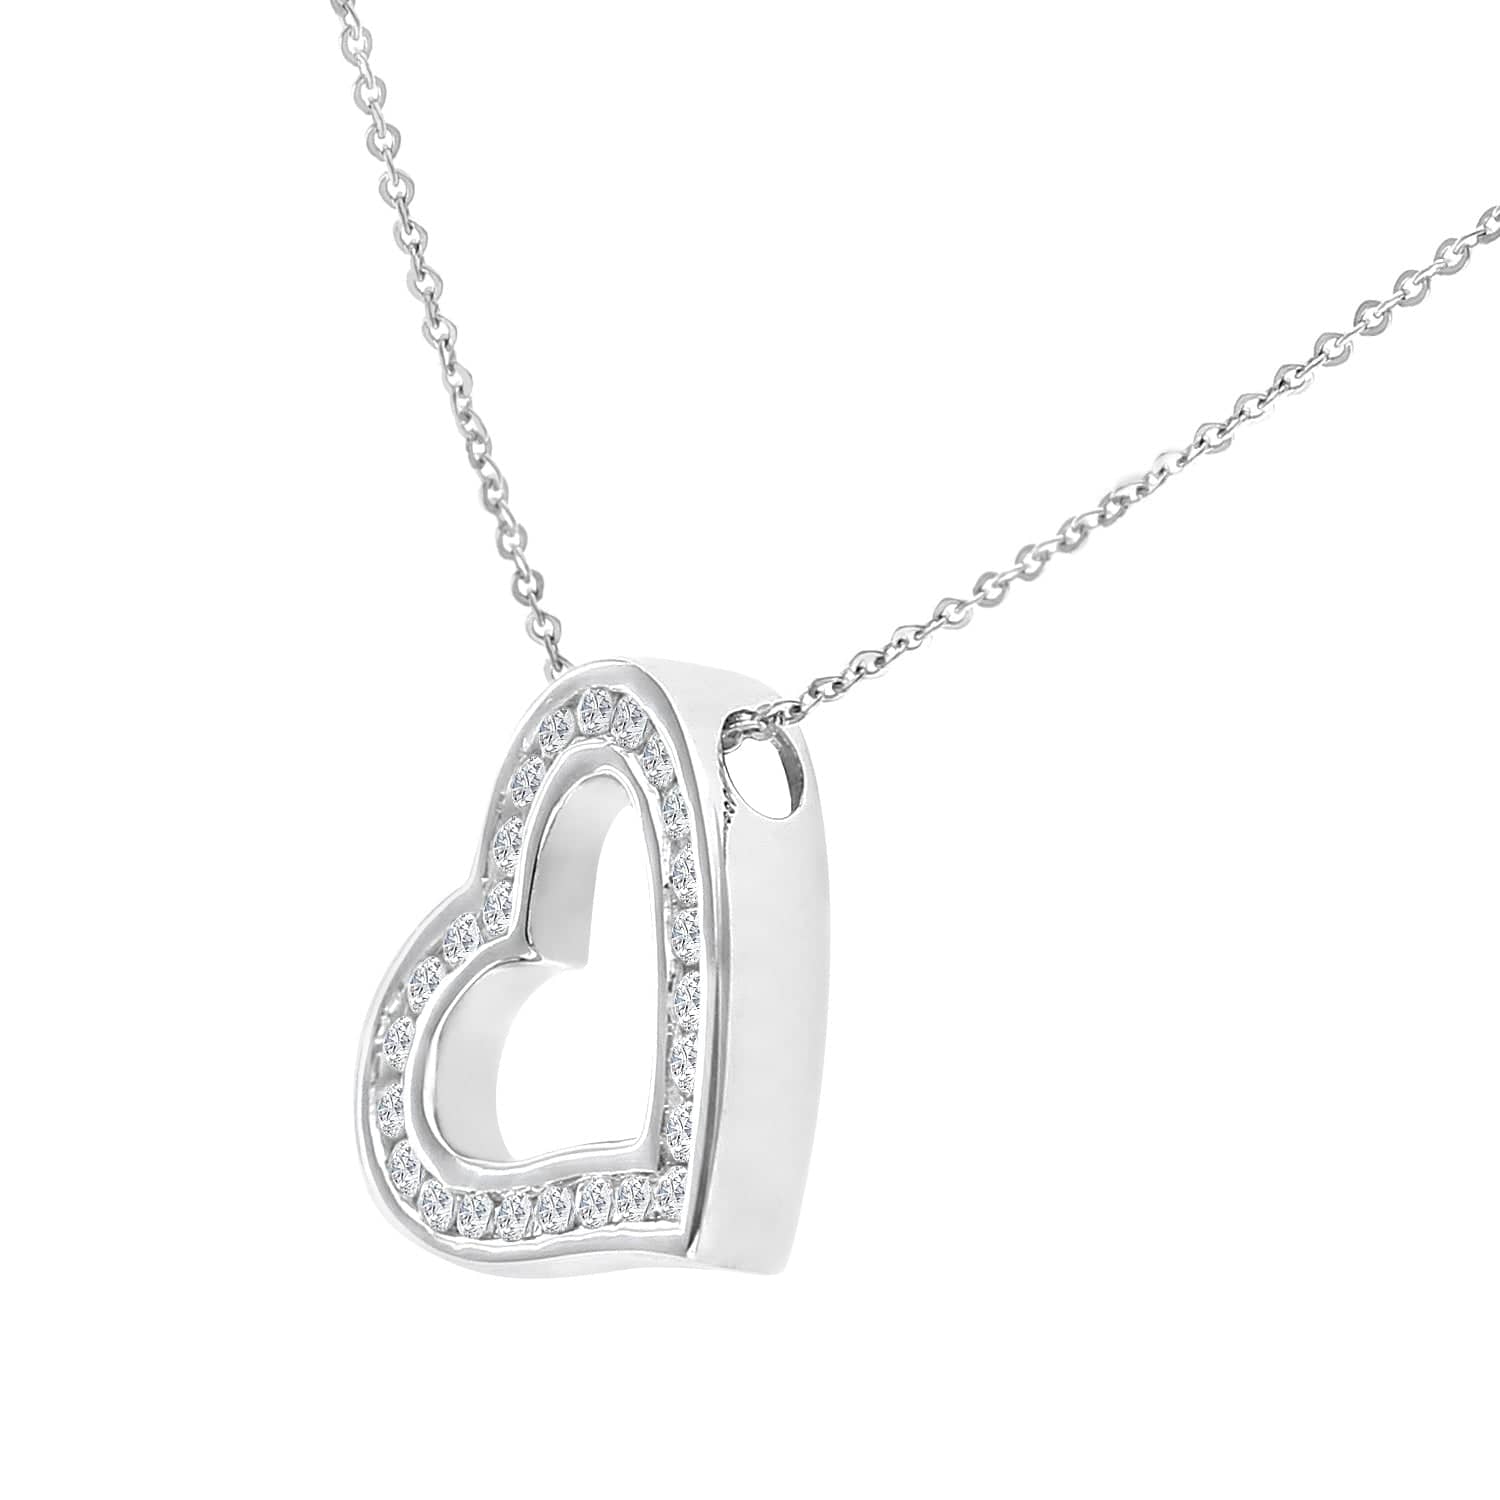 Lynora Luxe Pendant White Gold 9ct / Diamond 9ct White Gold 0.25ct Diamond Heart Pendant Necklace